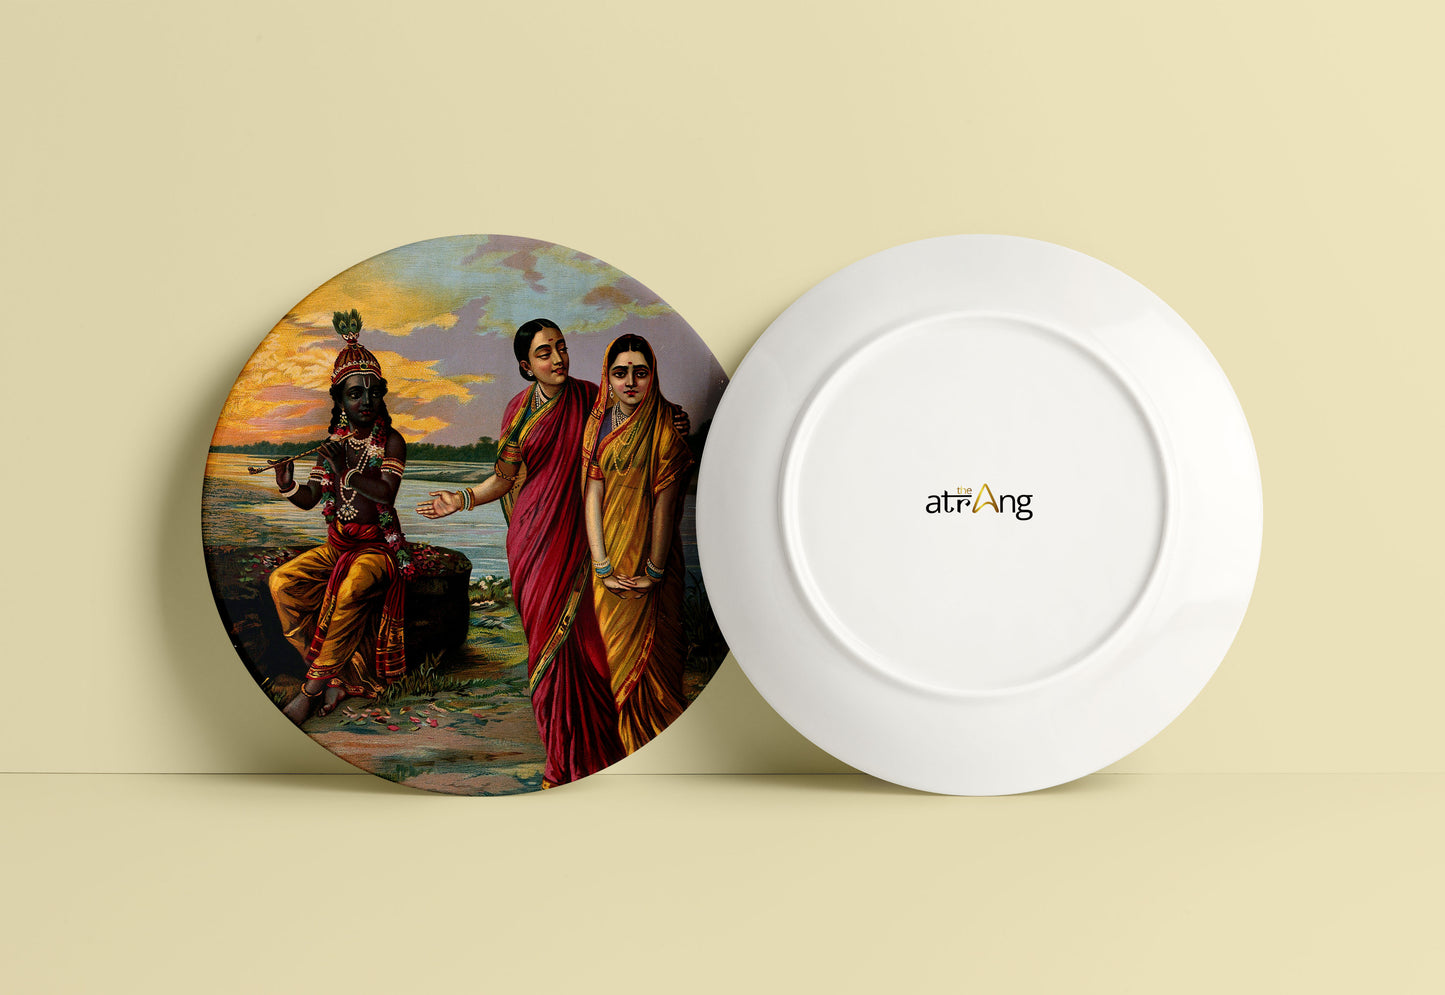 Krishna declaring his love for Radha via a confidante by Ravi Varma Ceramic Plate for Home Decor